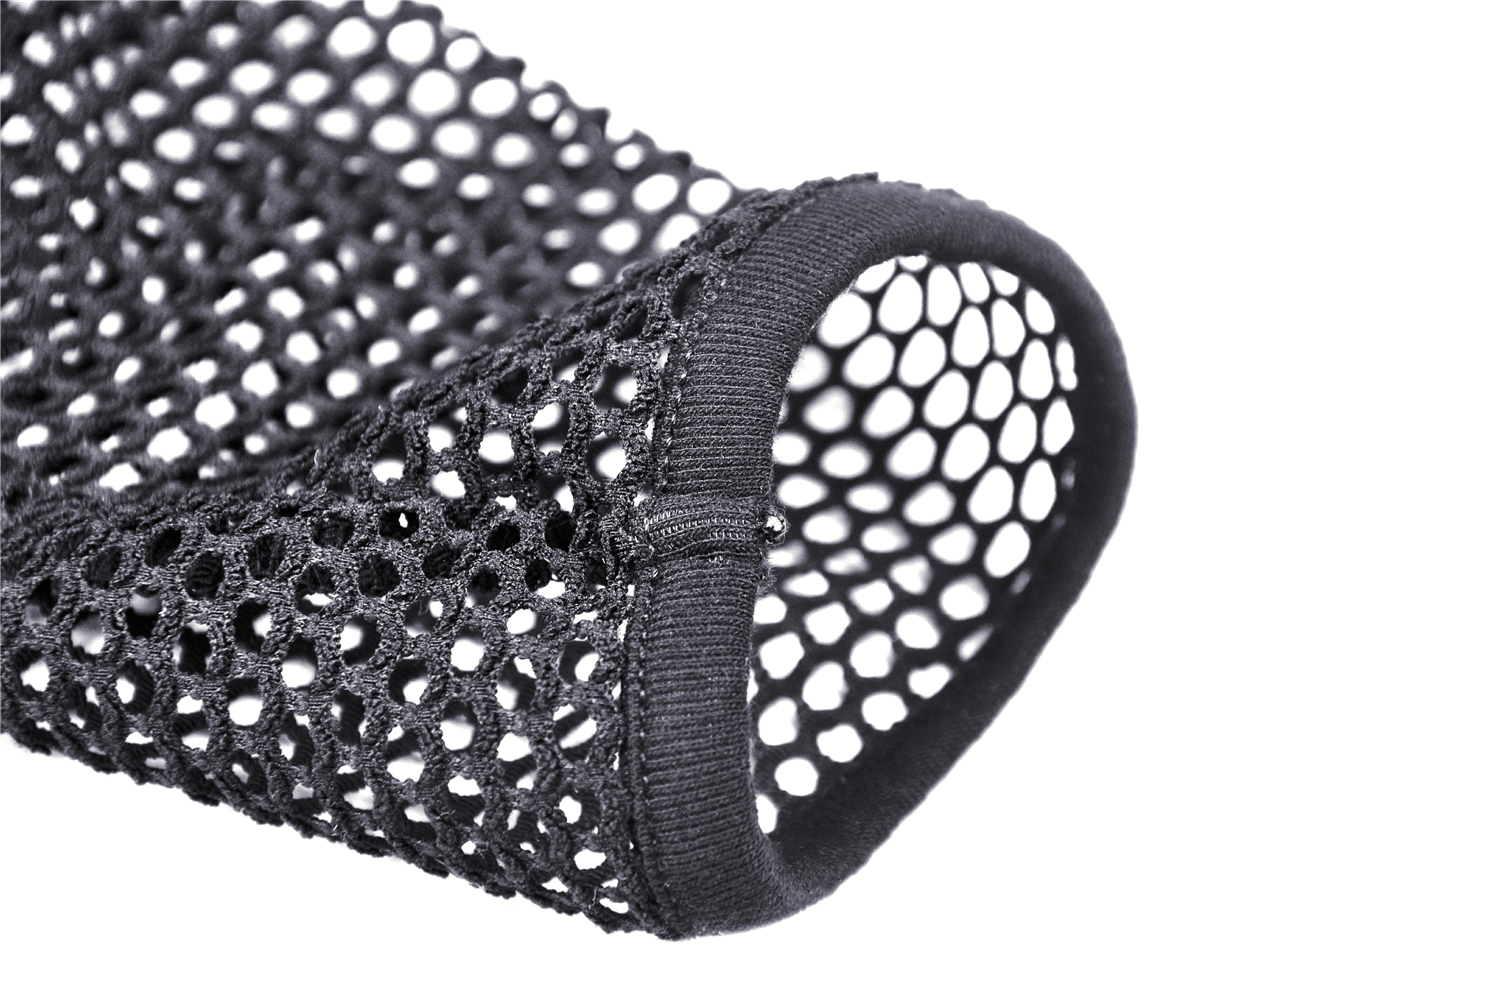 Stylish Black Mesh Crop Top with Cold Shoulder Design